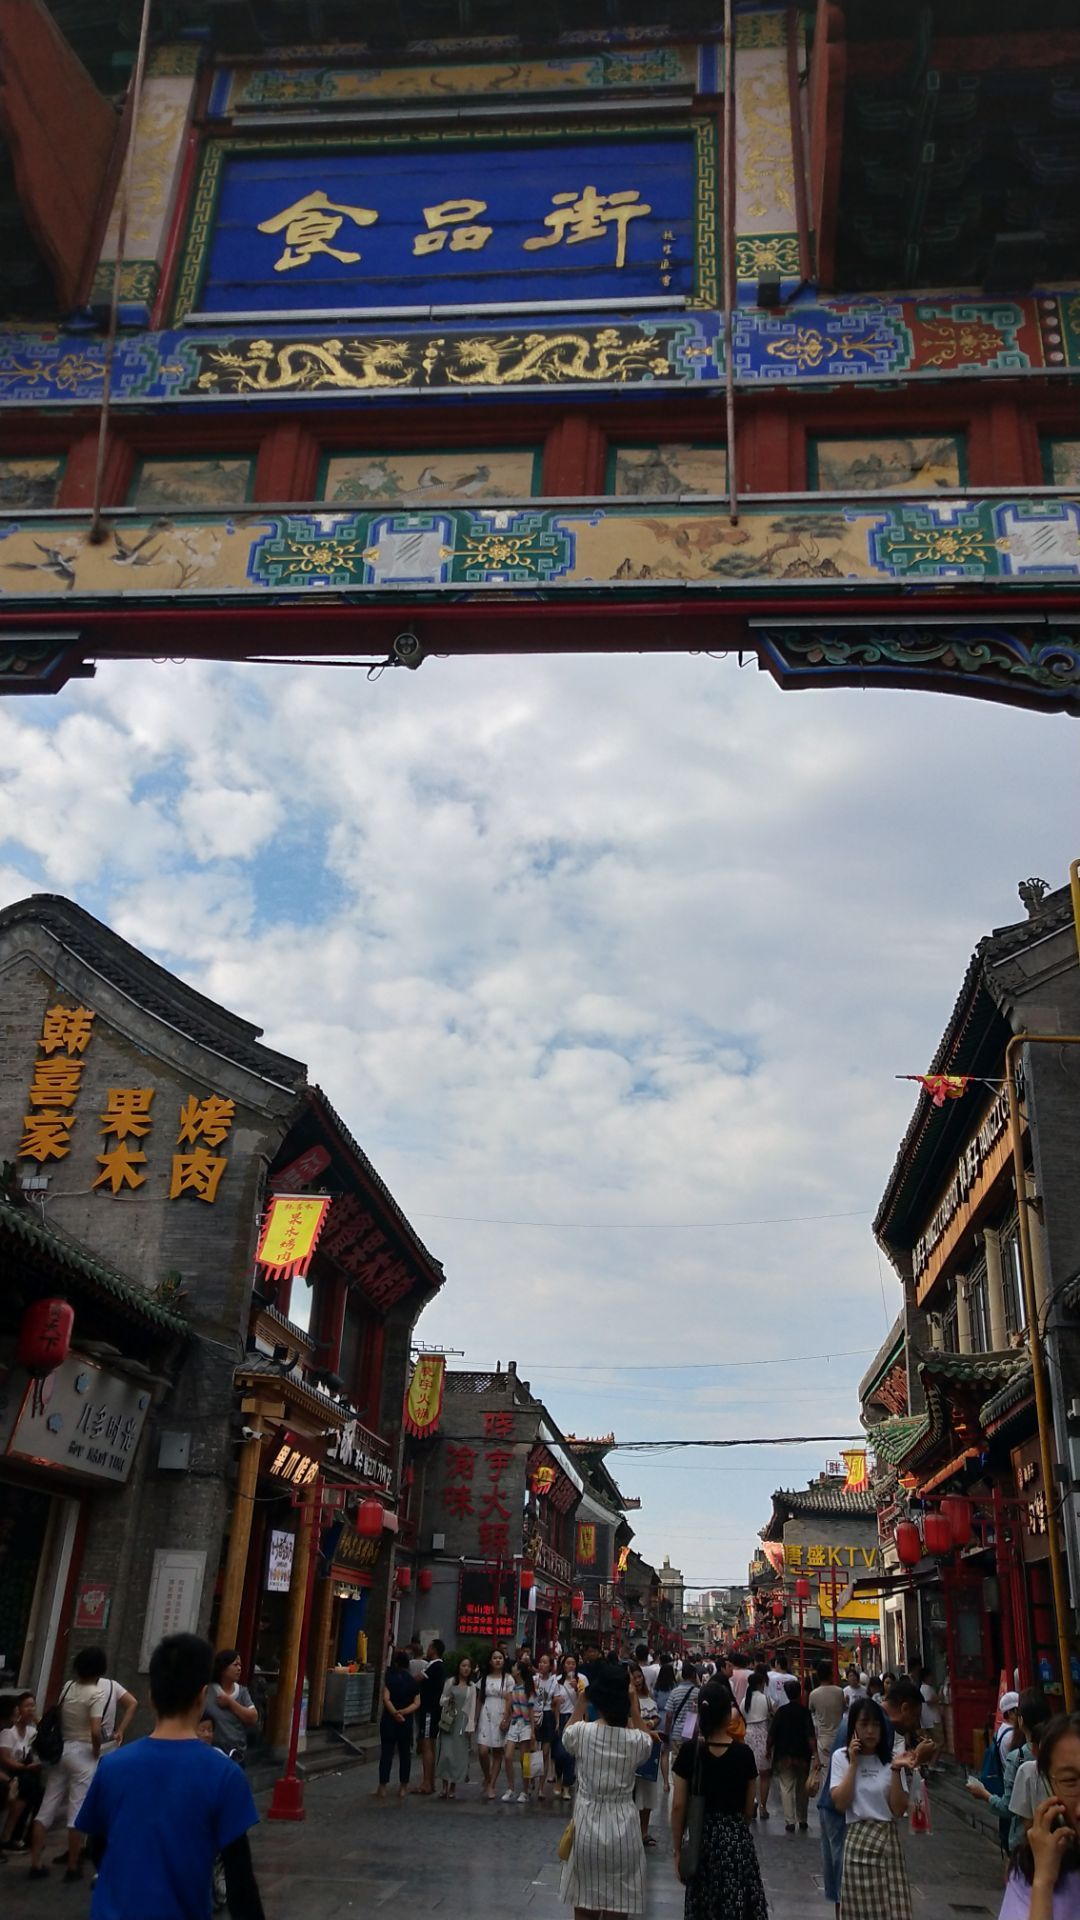 太原市食品街the food street of taiyuan